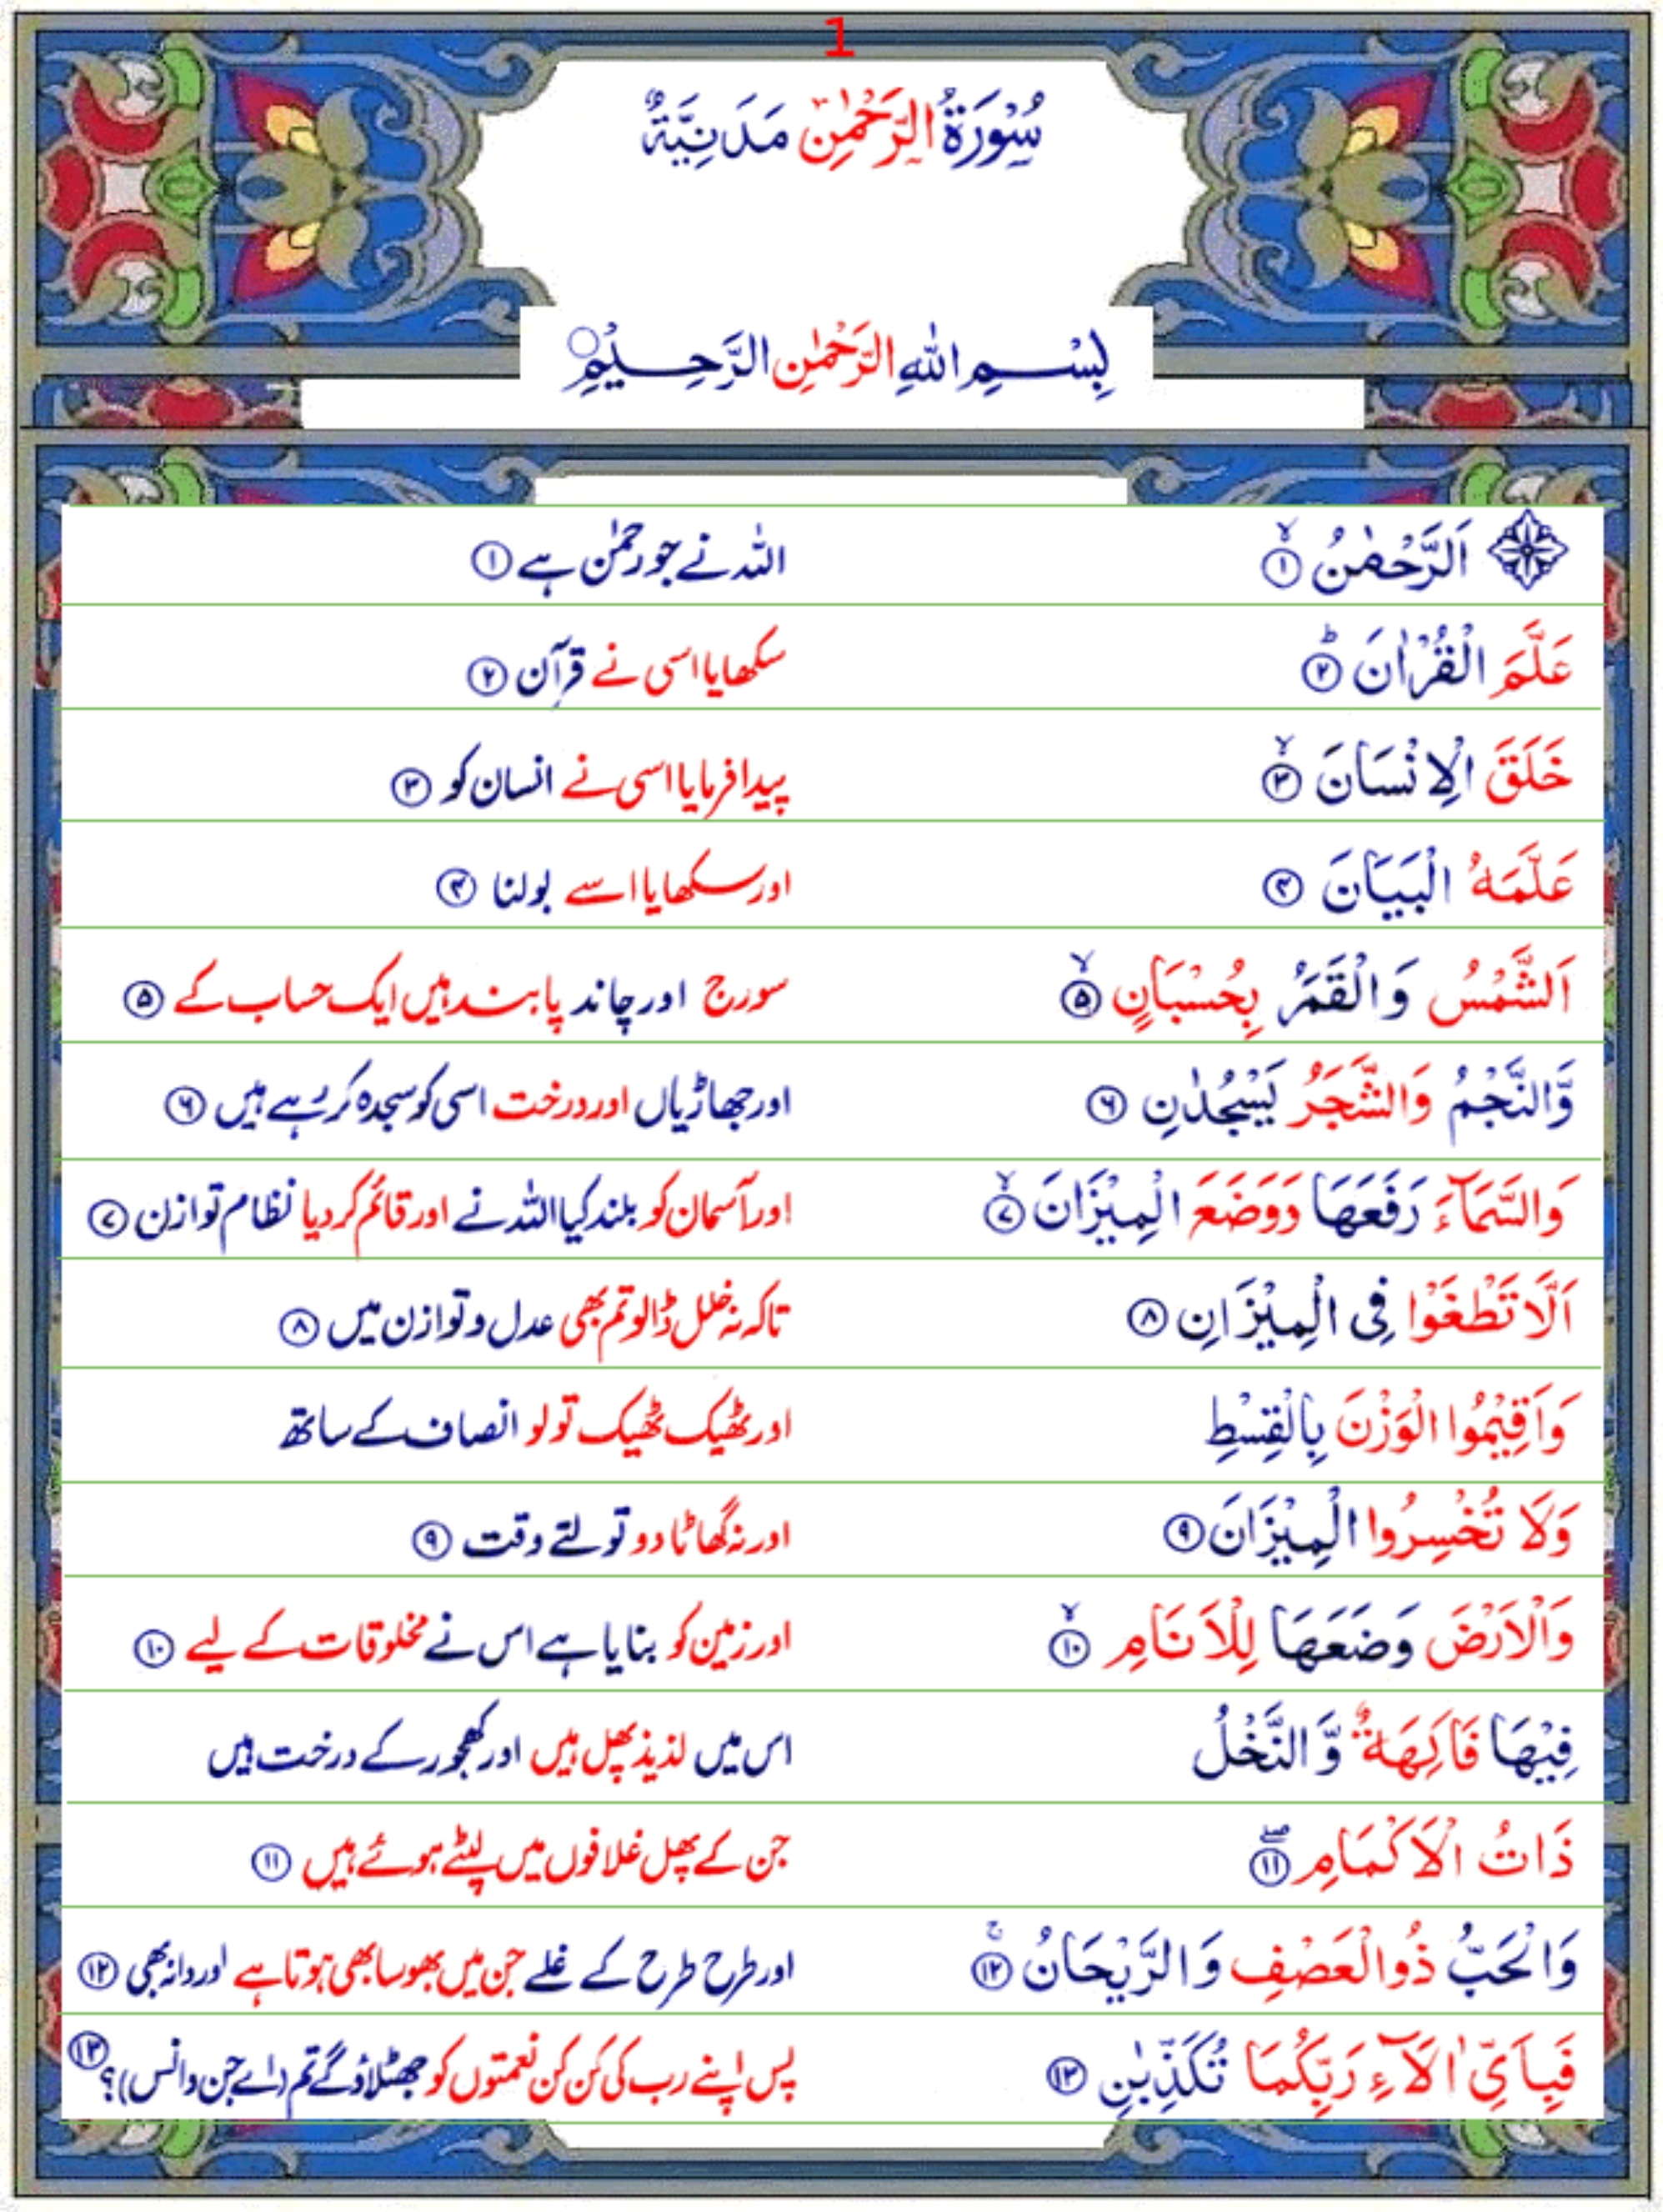 Download 60 Contoh Surat Surat Ar Rahman With Translation Gratis